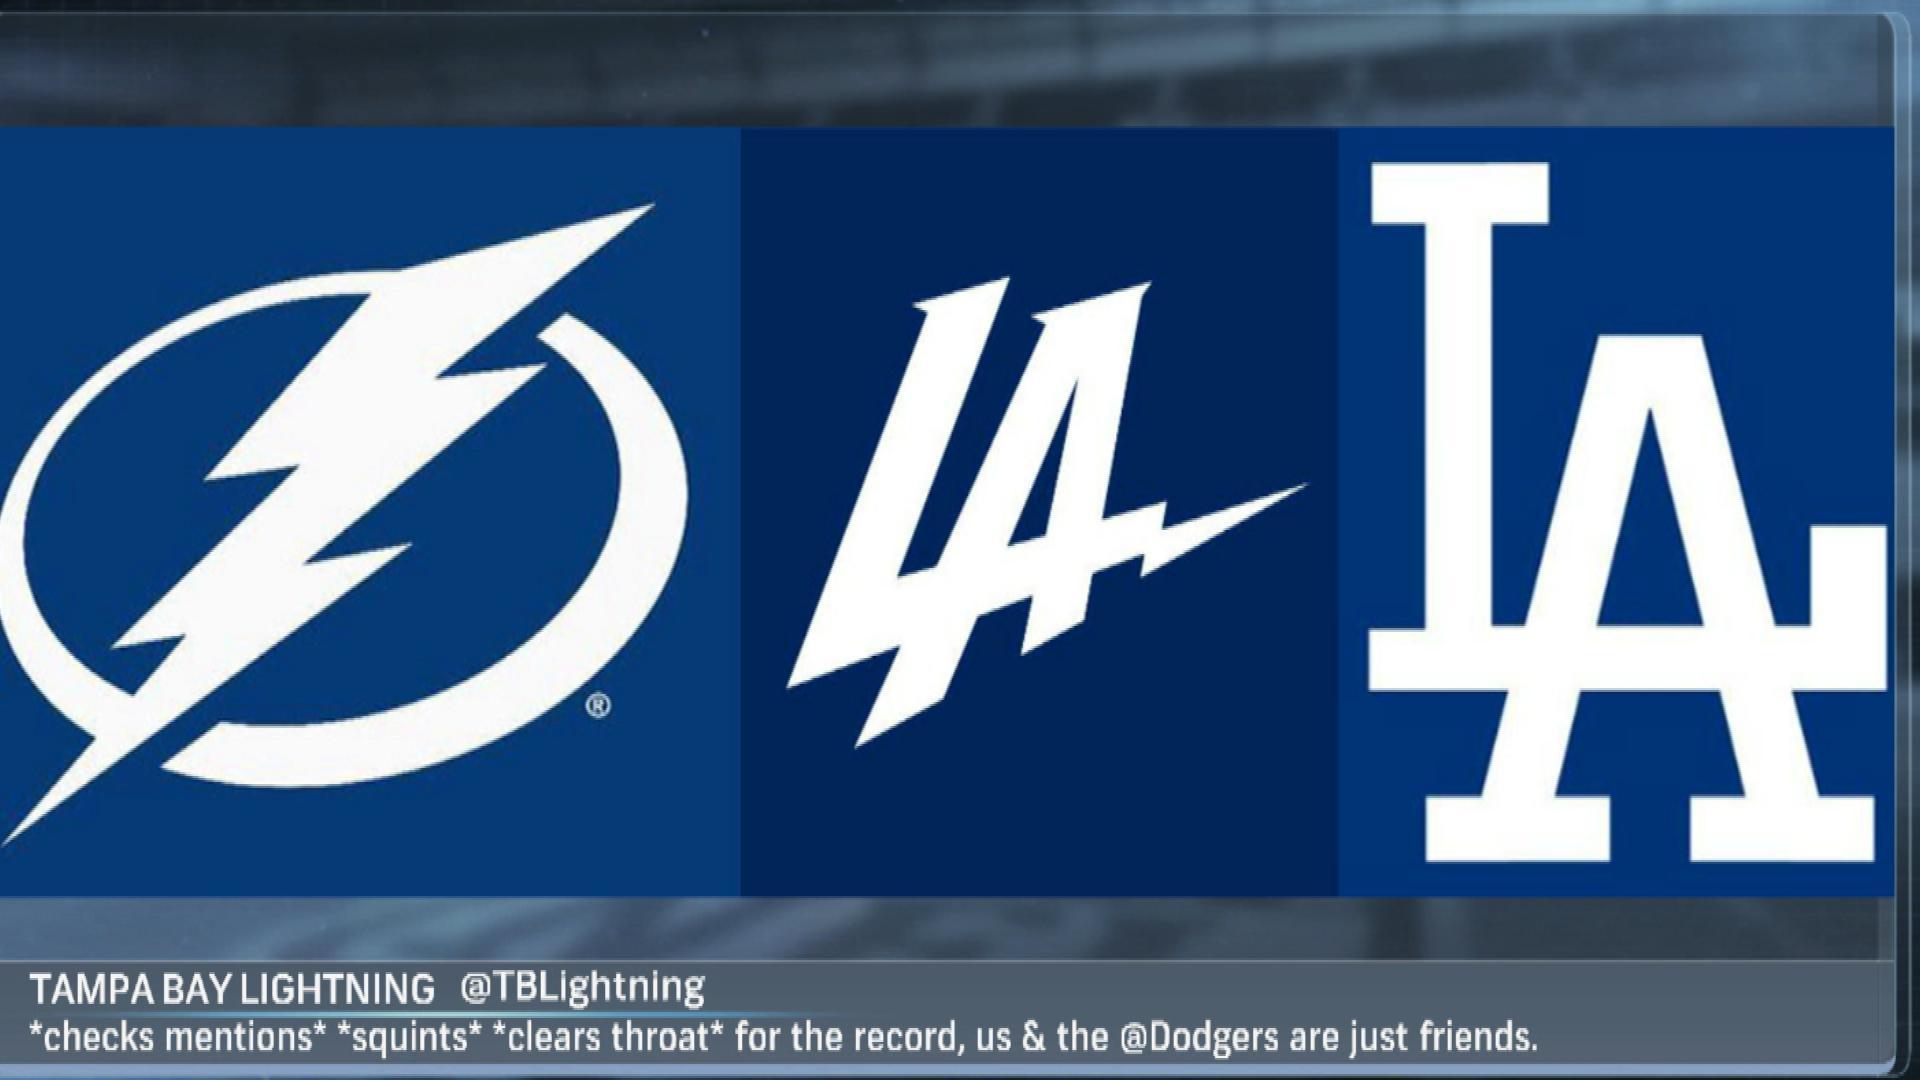 Nbcsports.com Logo - Los Angeles Chargers logo getting plenty of criticism | NBC Sports